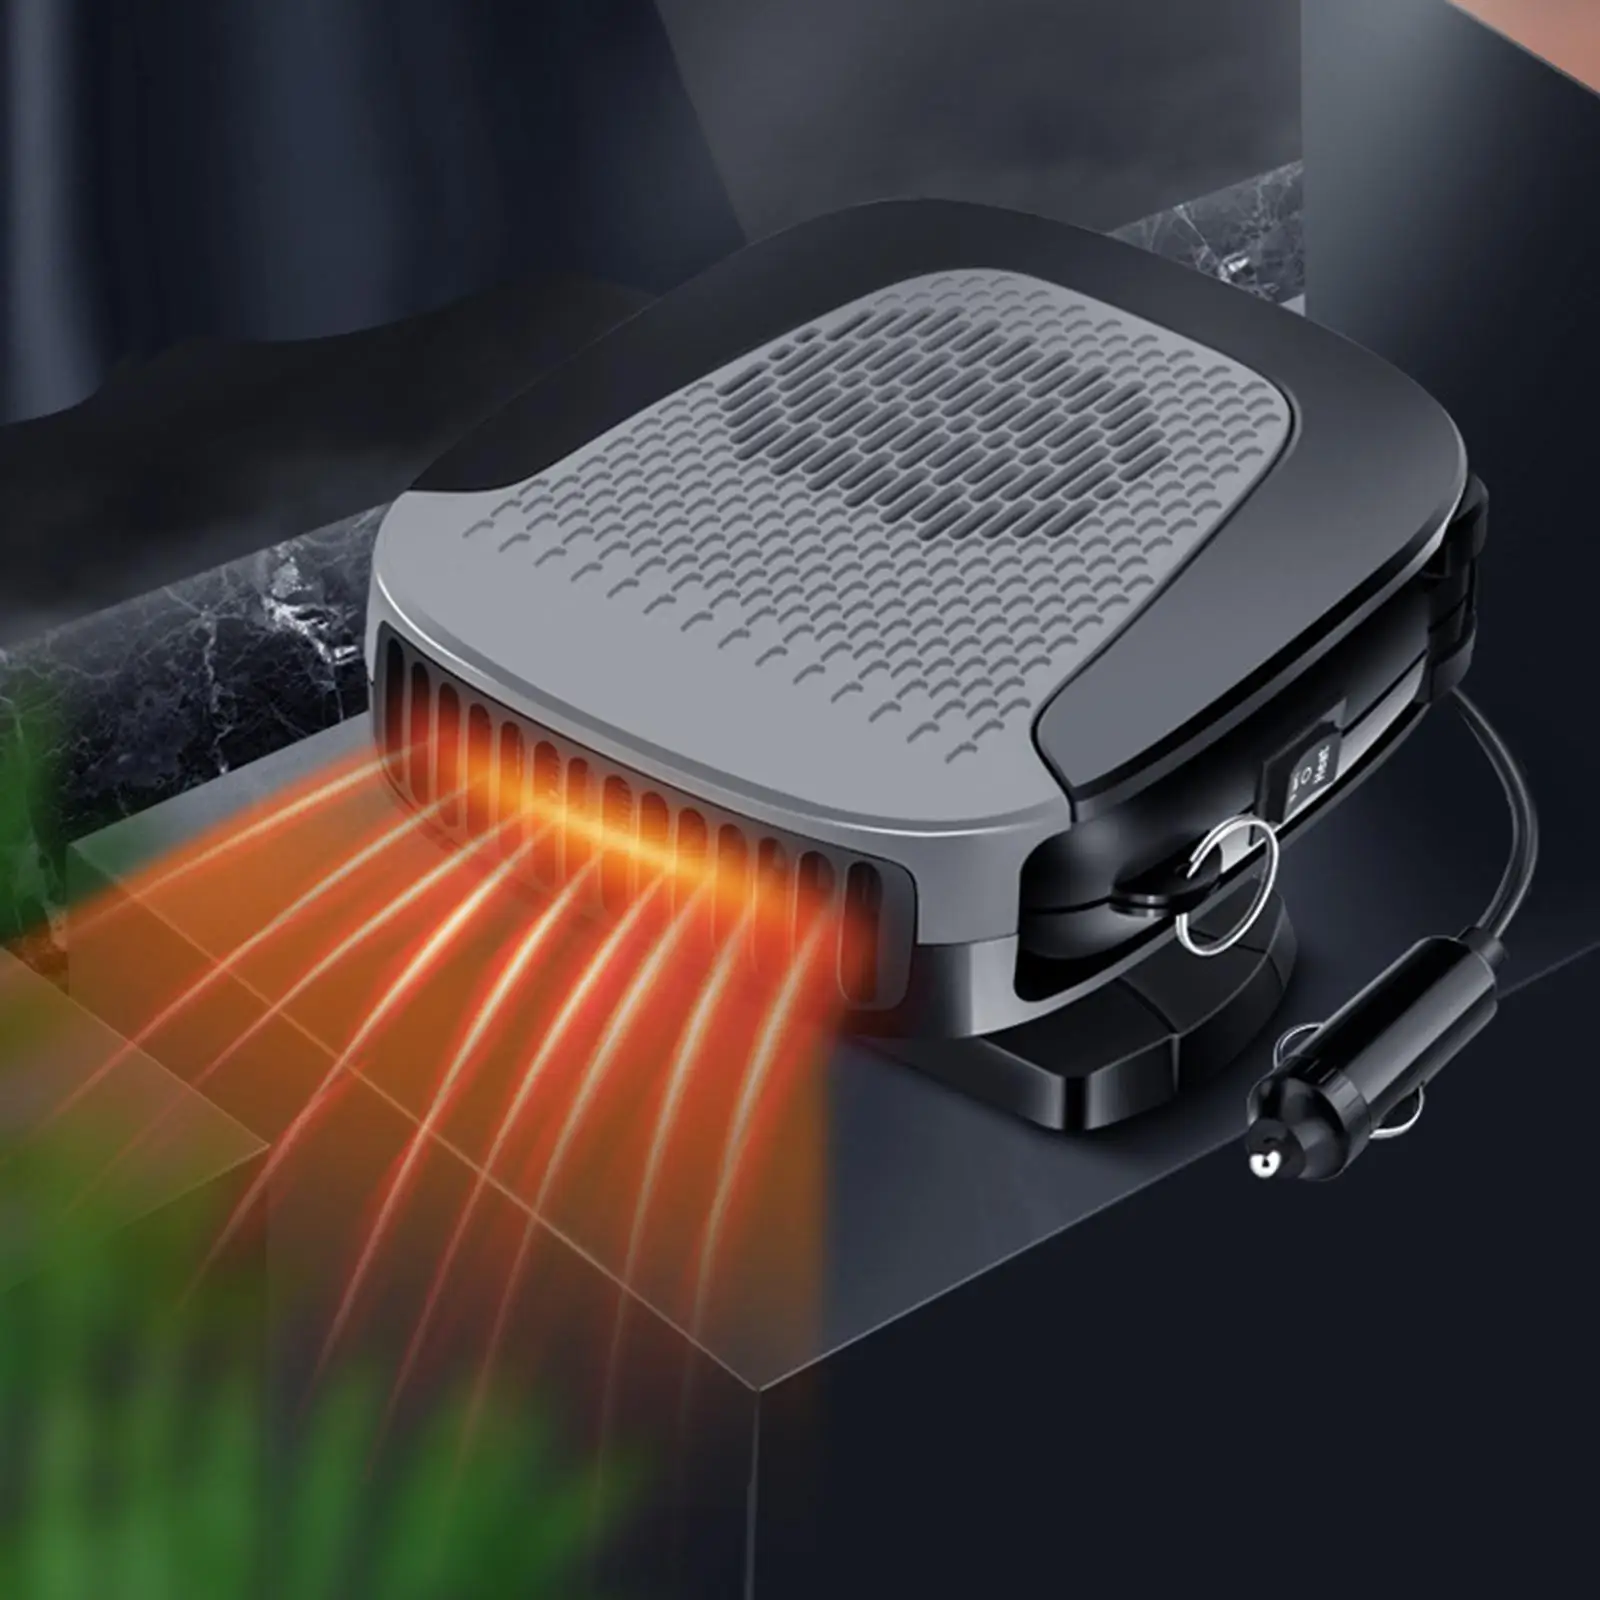  Fan Heater 12V ,Low Noise Fast Heating  Function 360 Degree Adjustment 150W  